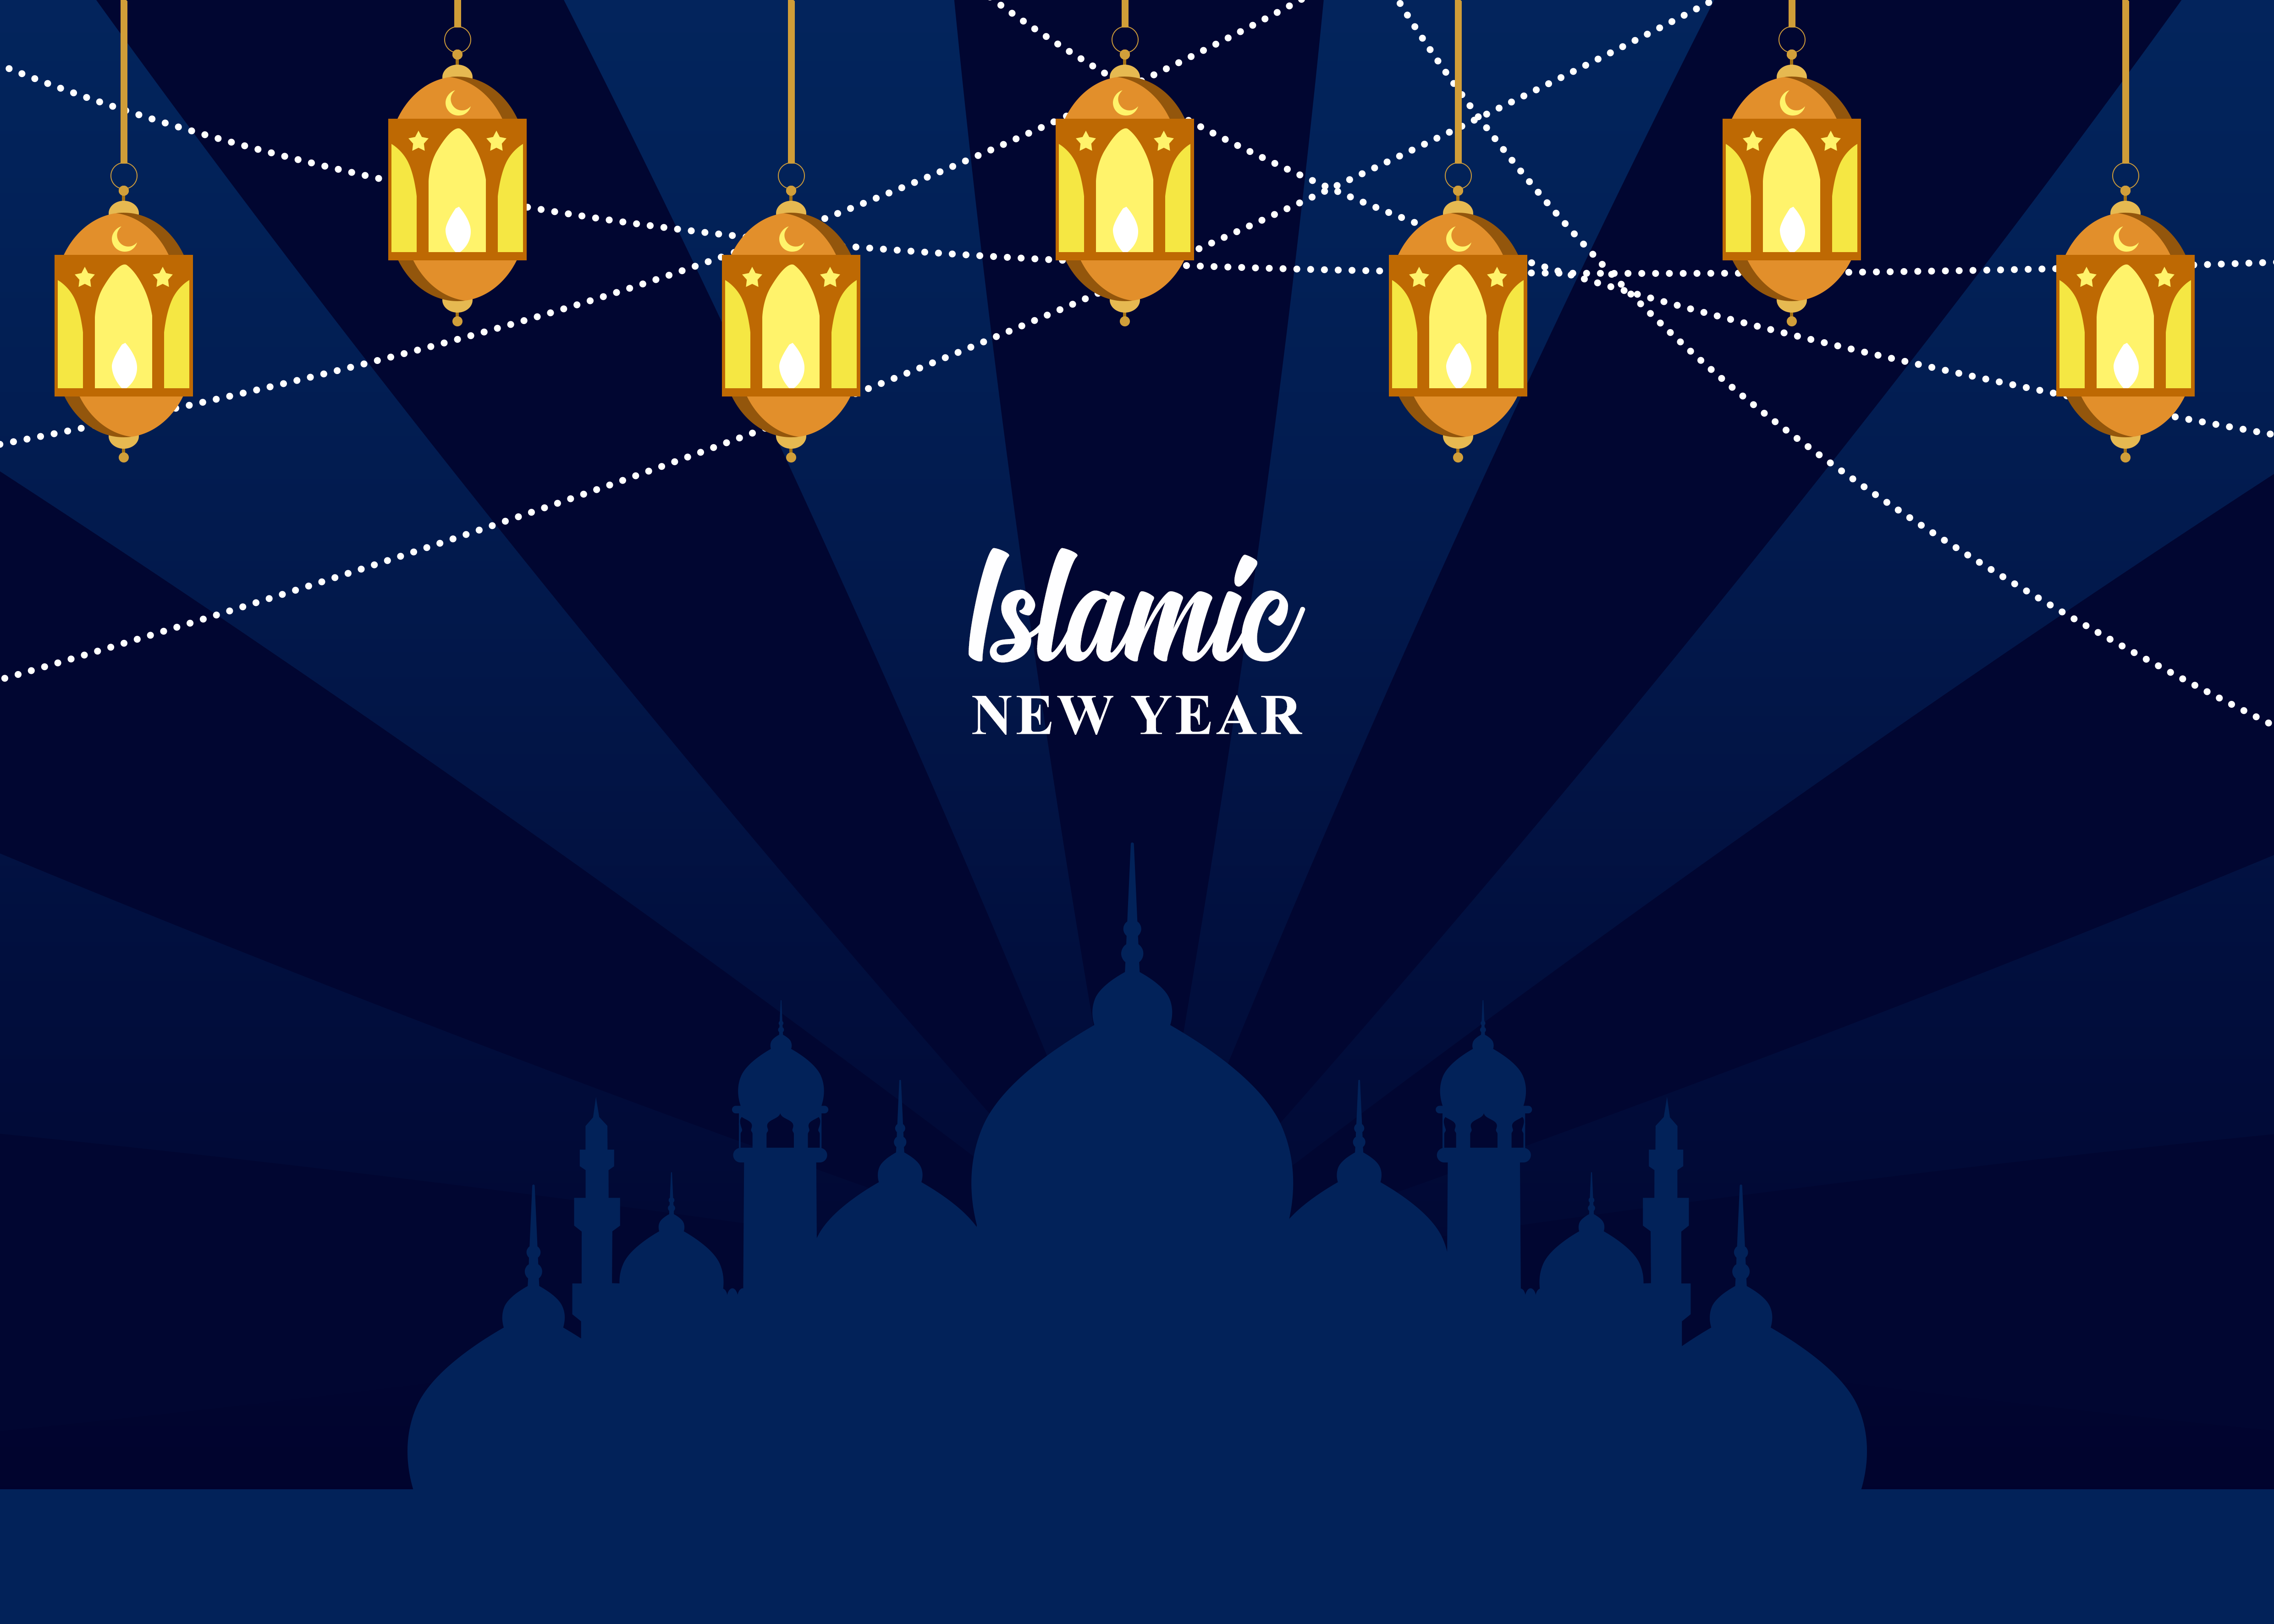 Arabic Lantern With Islamic New Year Background